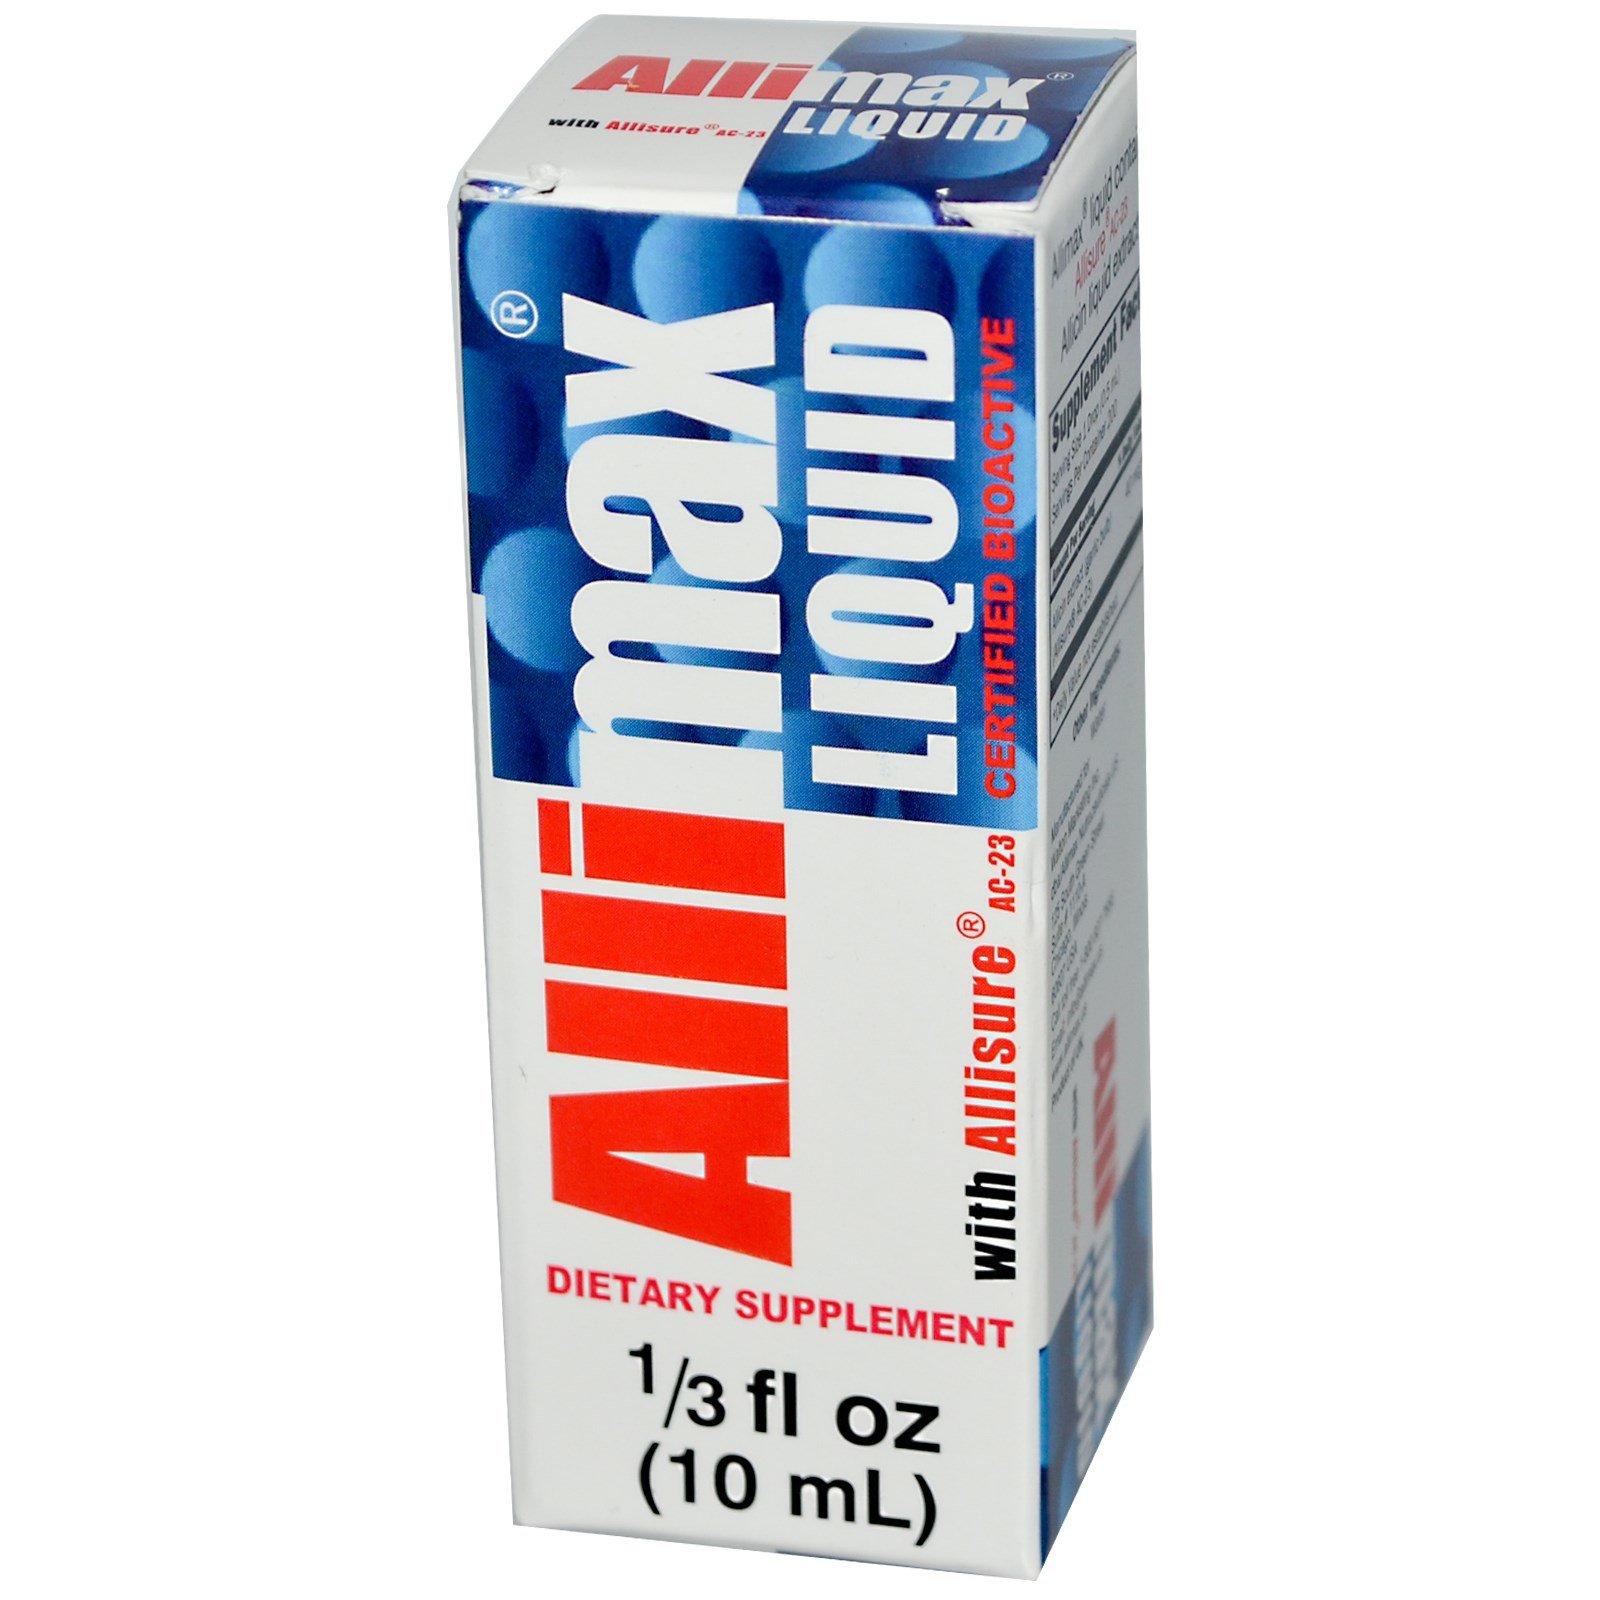 Allimax Liquid 0.33 fl oz